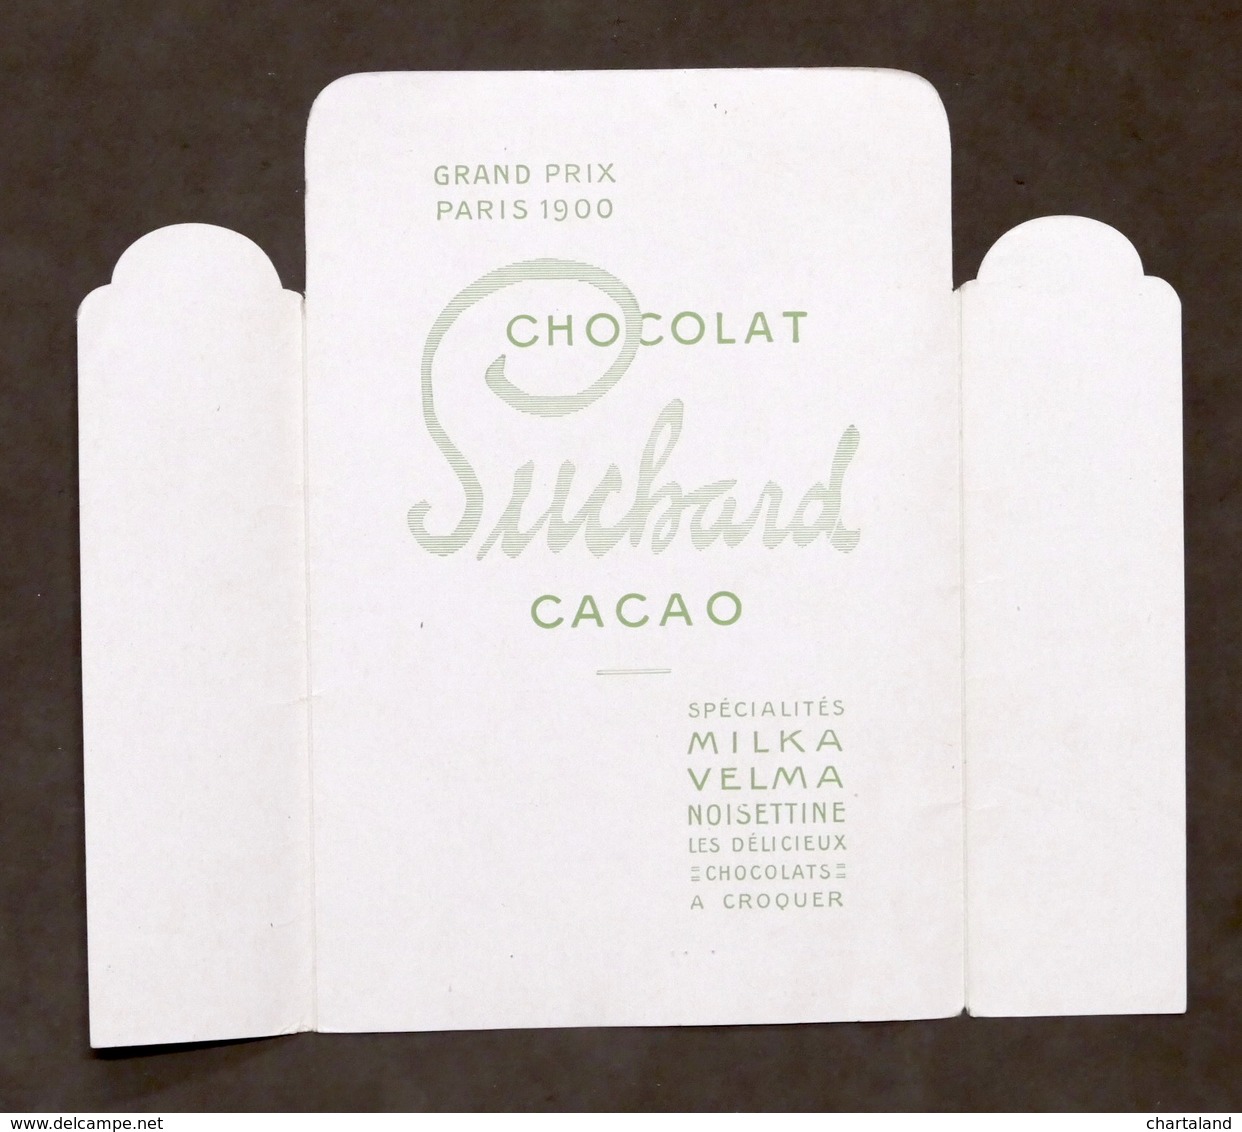 Collezionismo Menu - Suchard Chocolat Cacao - Milka Velma - 1914 - Menus